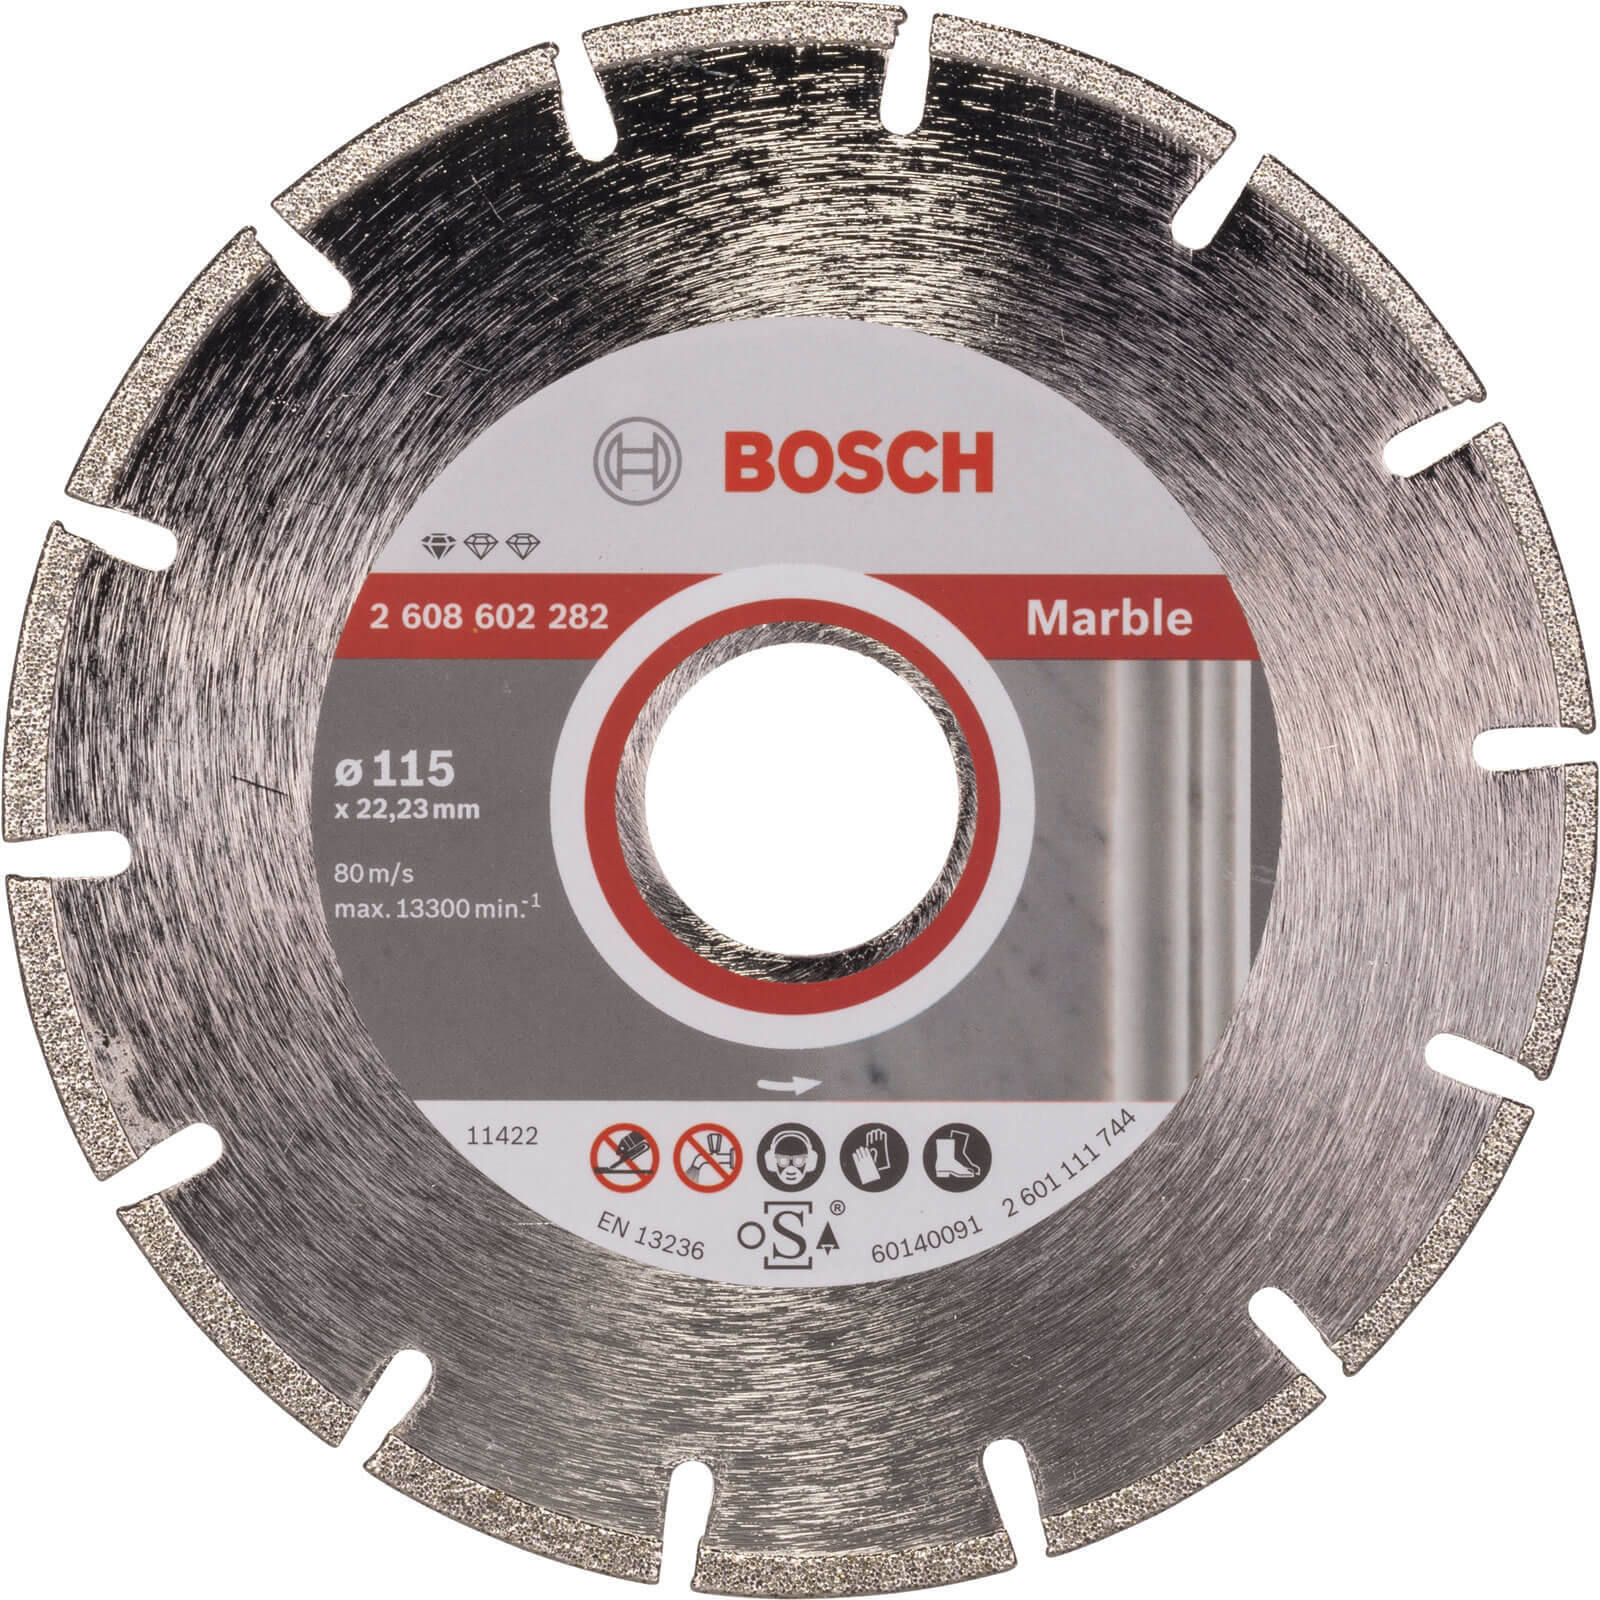 Photos - Cutting Disc Bosch Diamond Disc for Marble 115mm 2608602282 